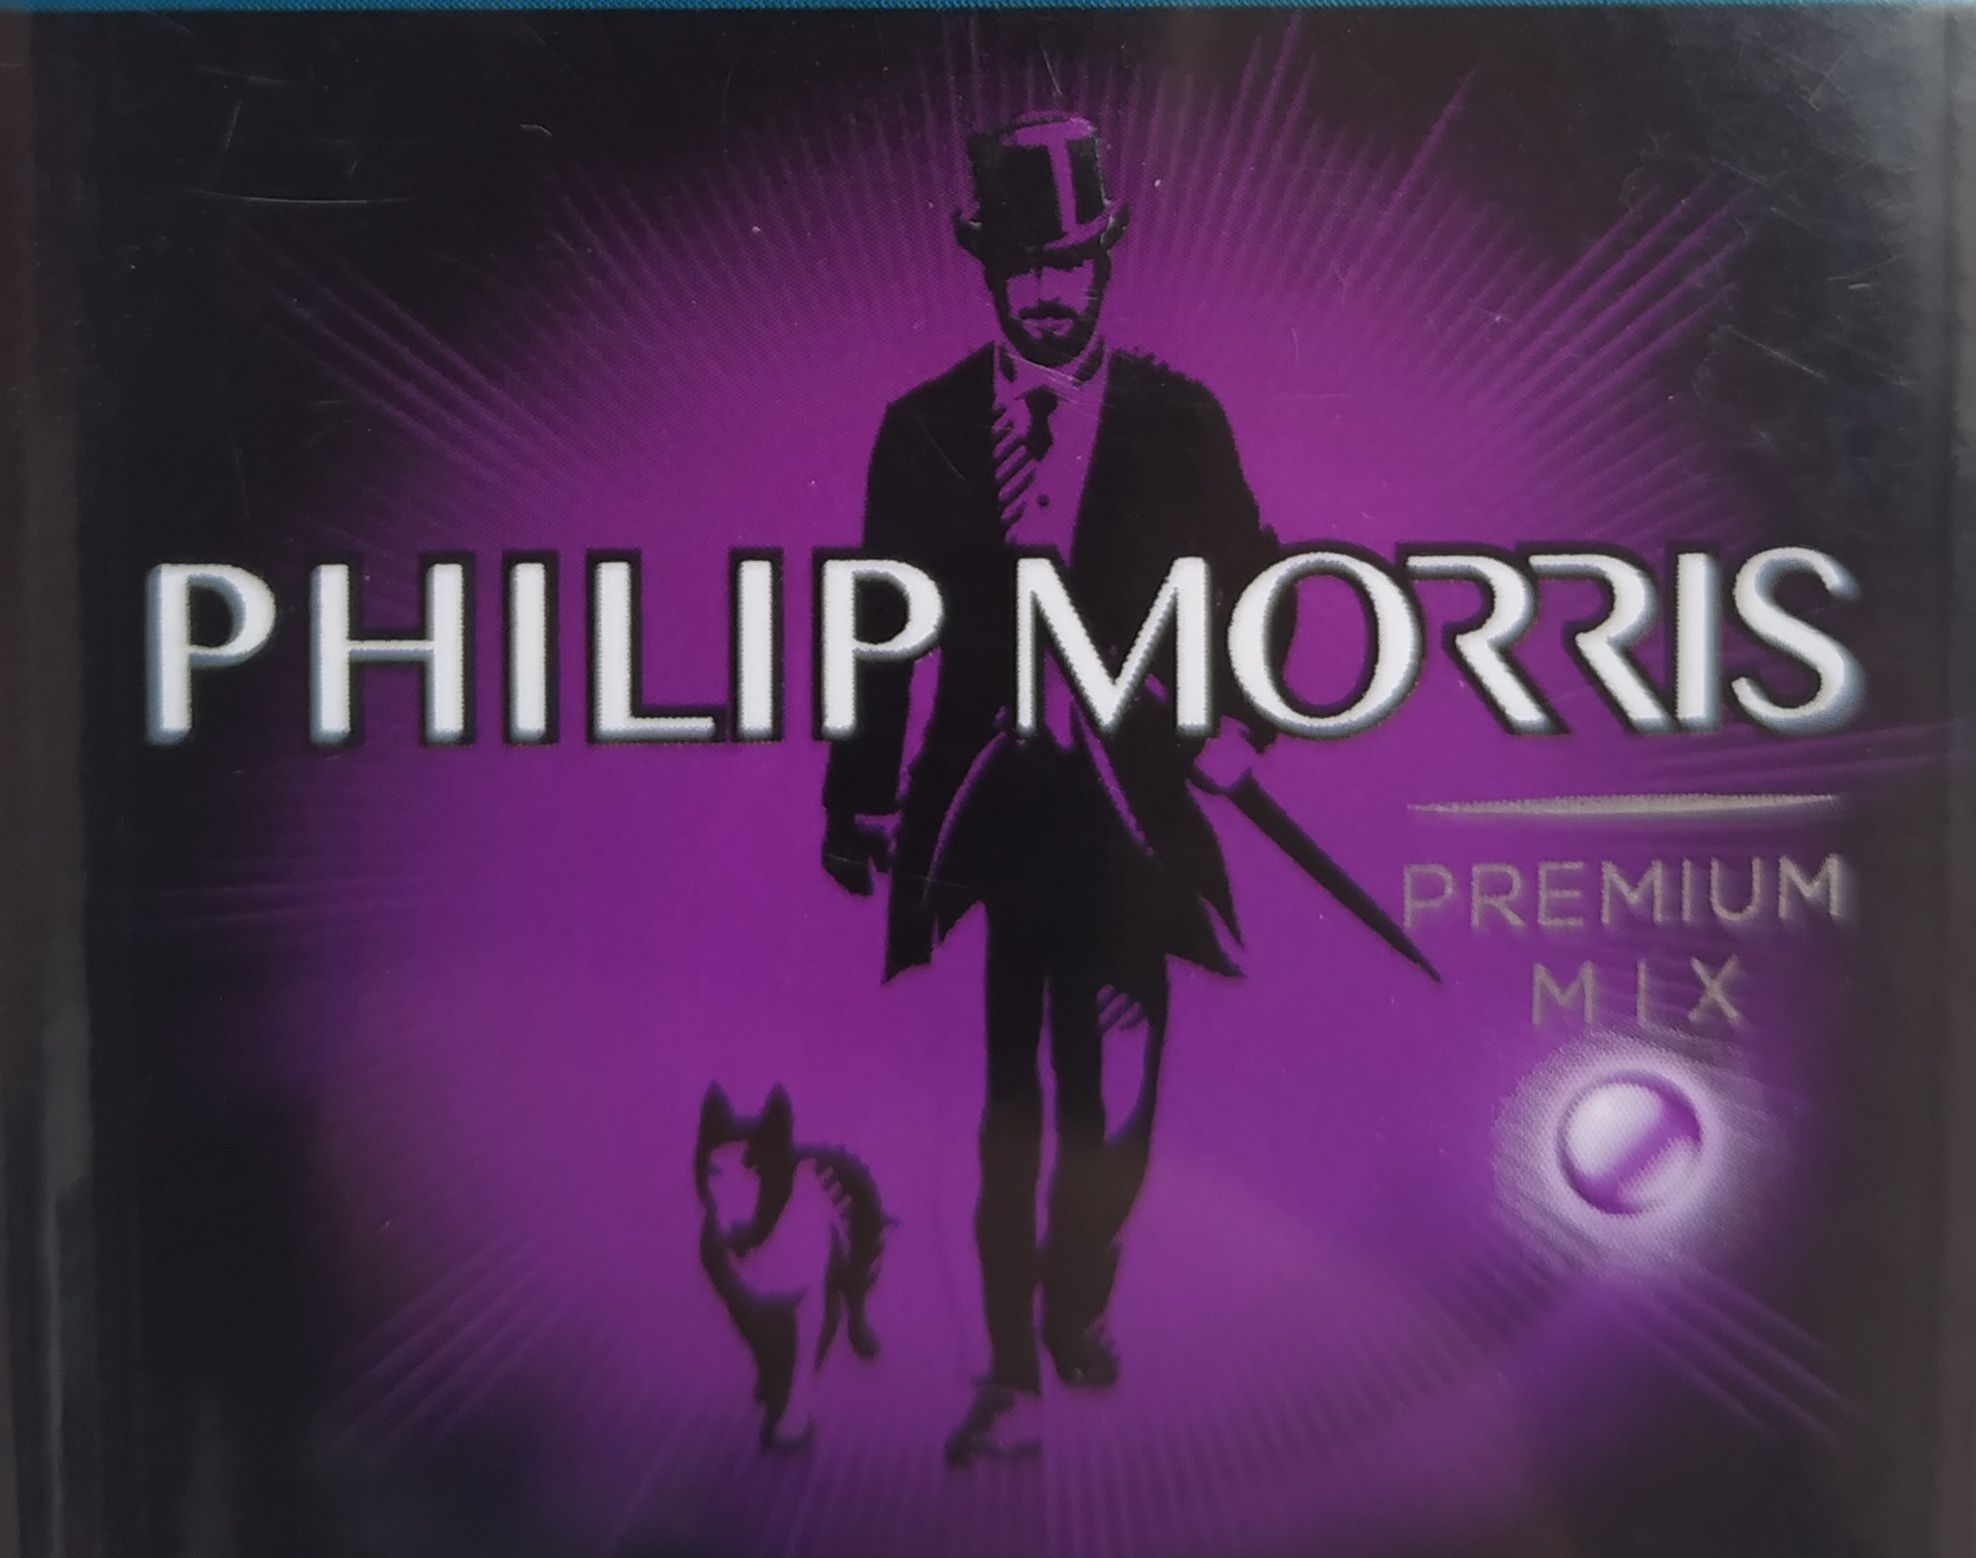 Филип морис фиолетовый. Philip Morris Compact Premium. Сигареты Philip Morris Premium Mix. Philip Morris Compact Premium Mix. Philip Morris фиолетовый.